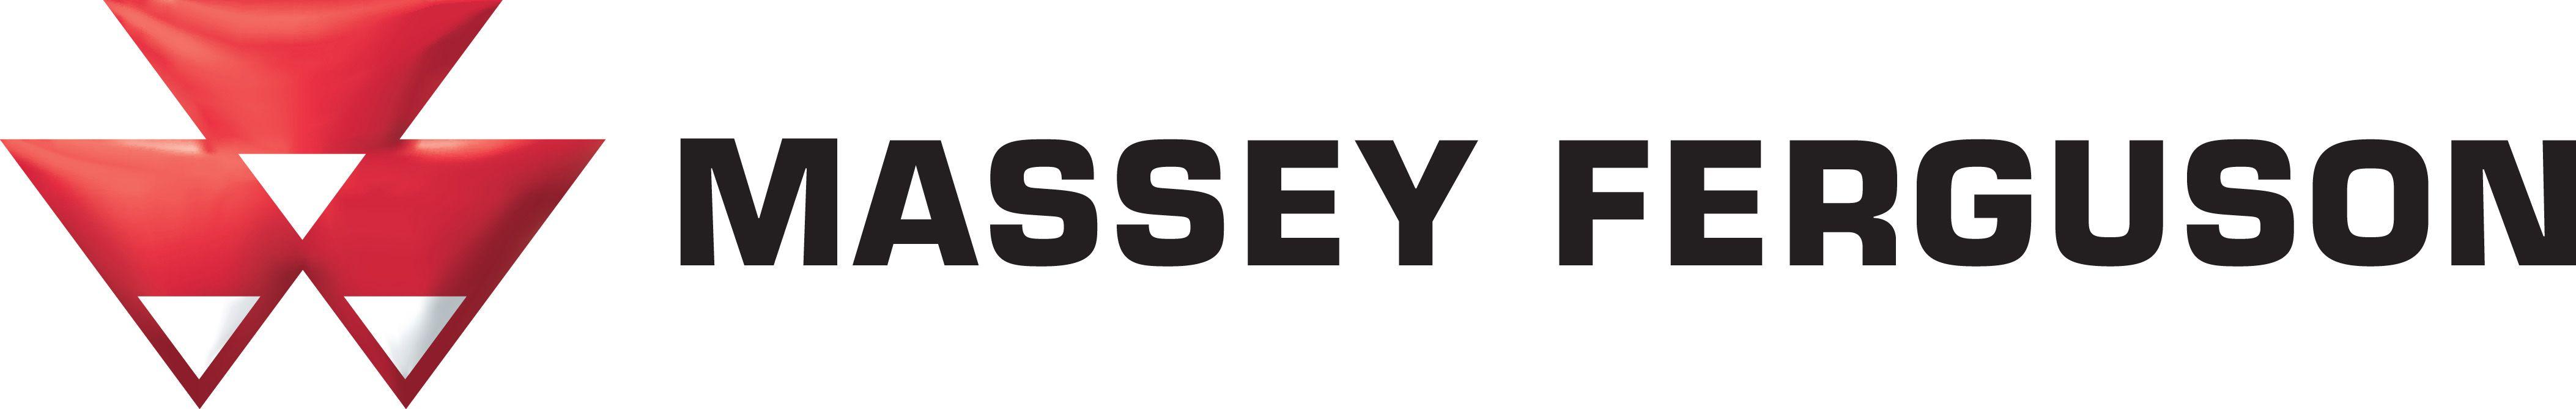 Massey Ferguson Logo - Massey Ferguson Grounds Care